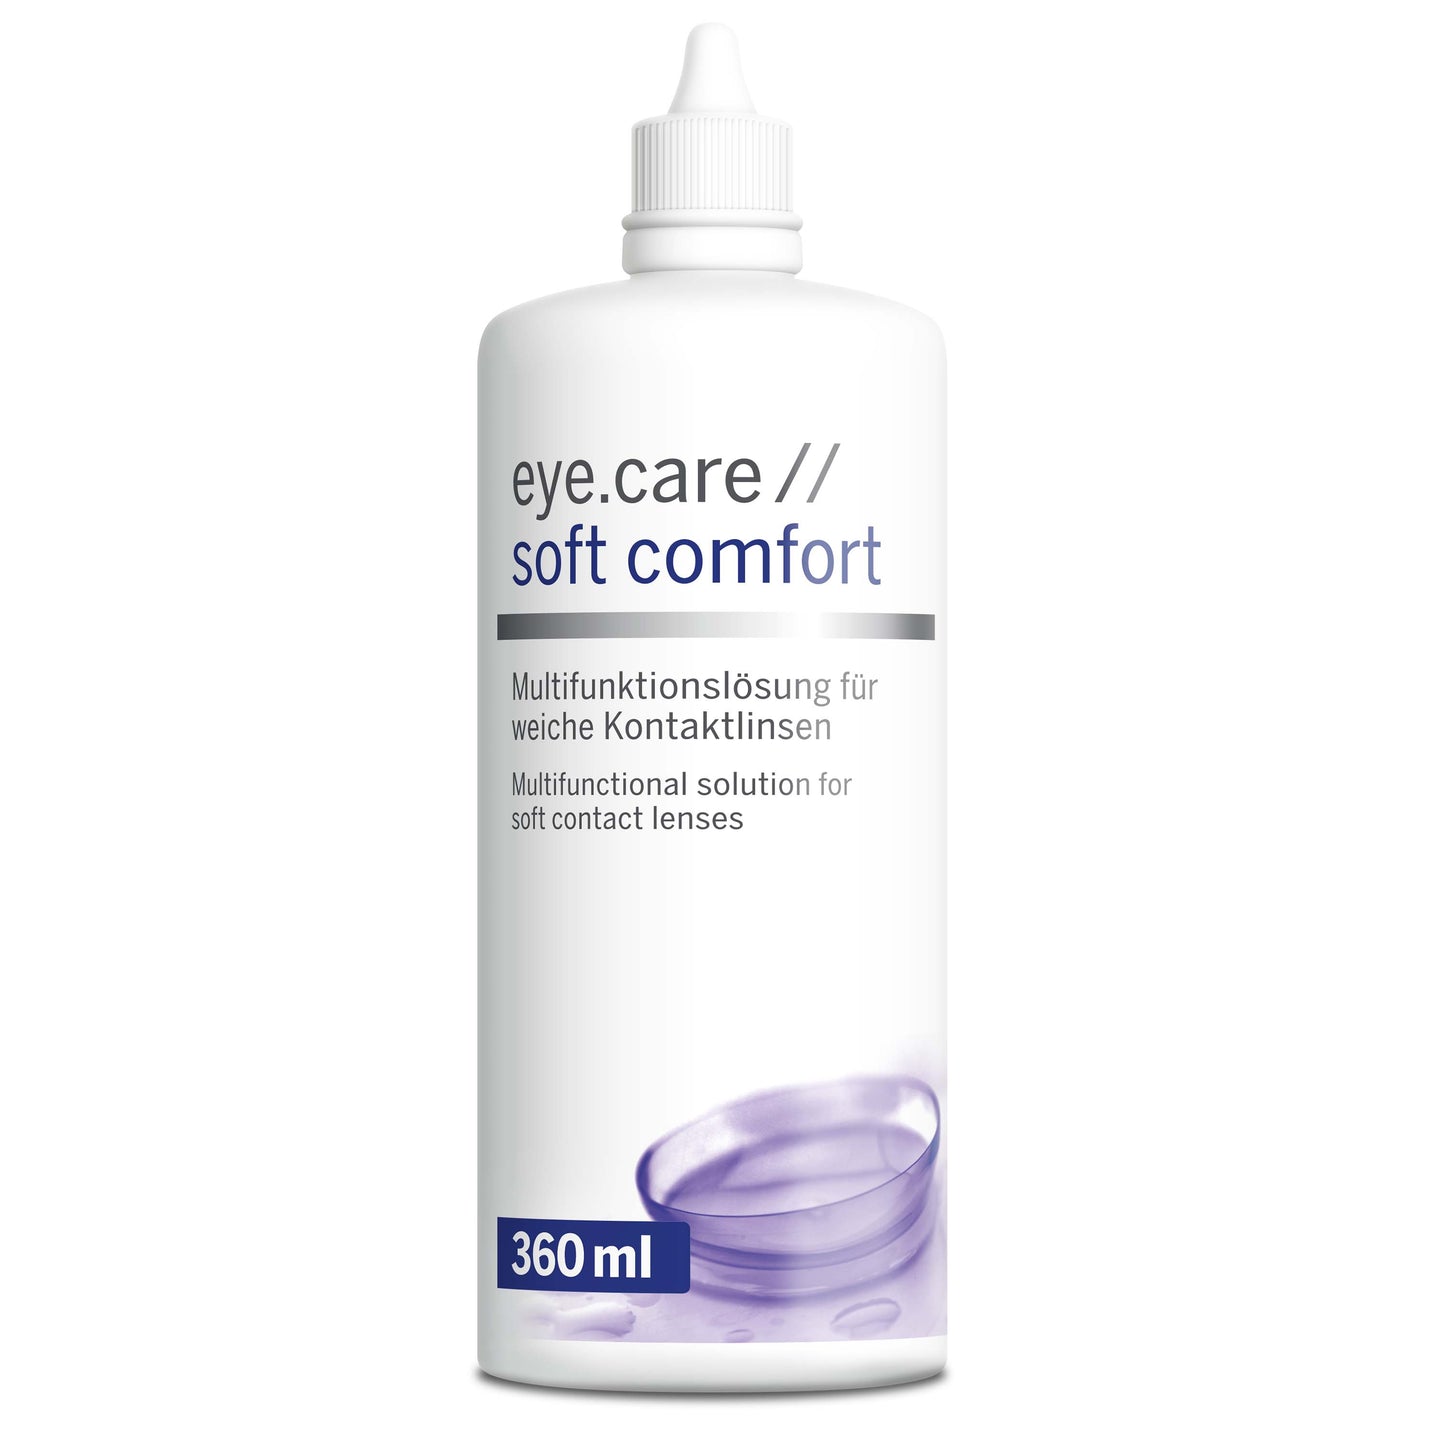 eye.care // soft comfort solution